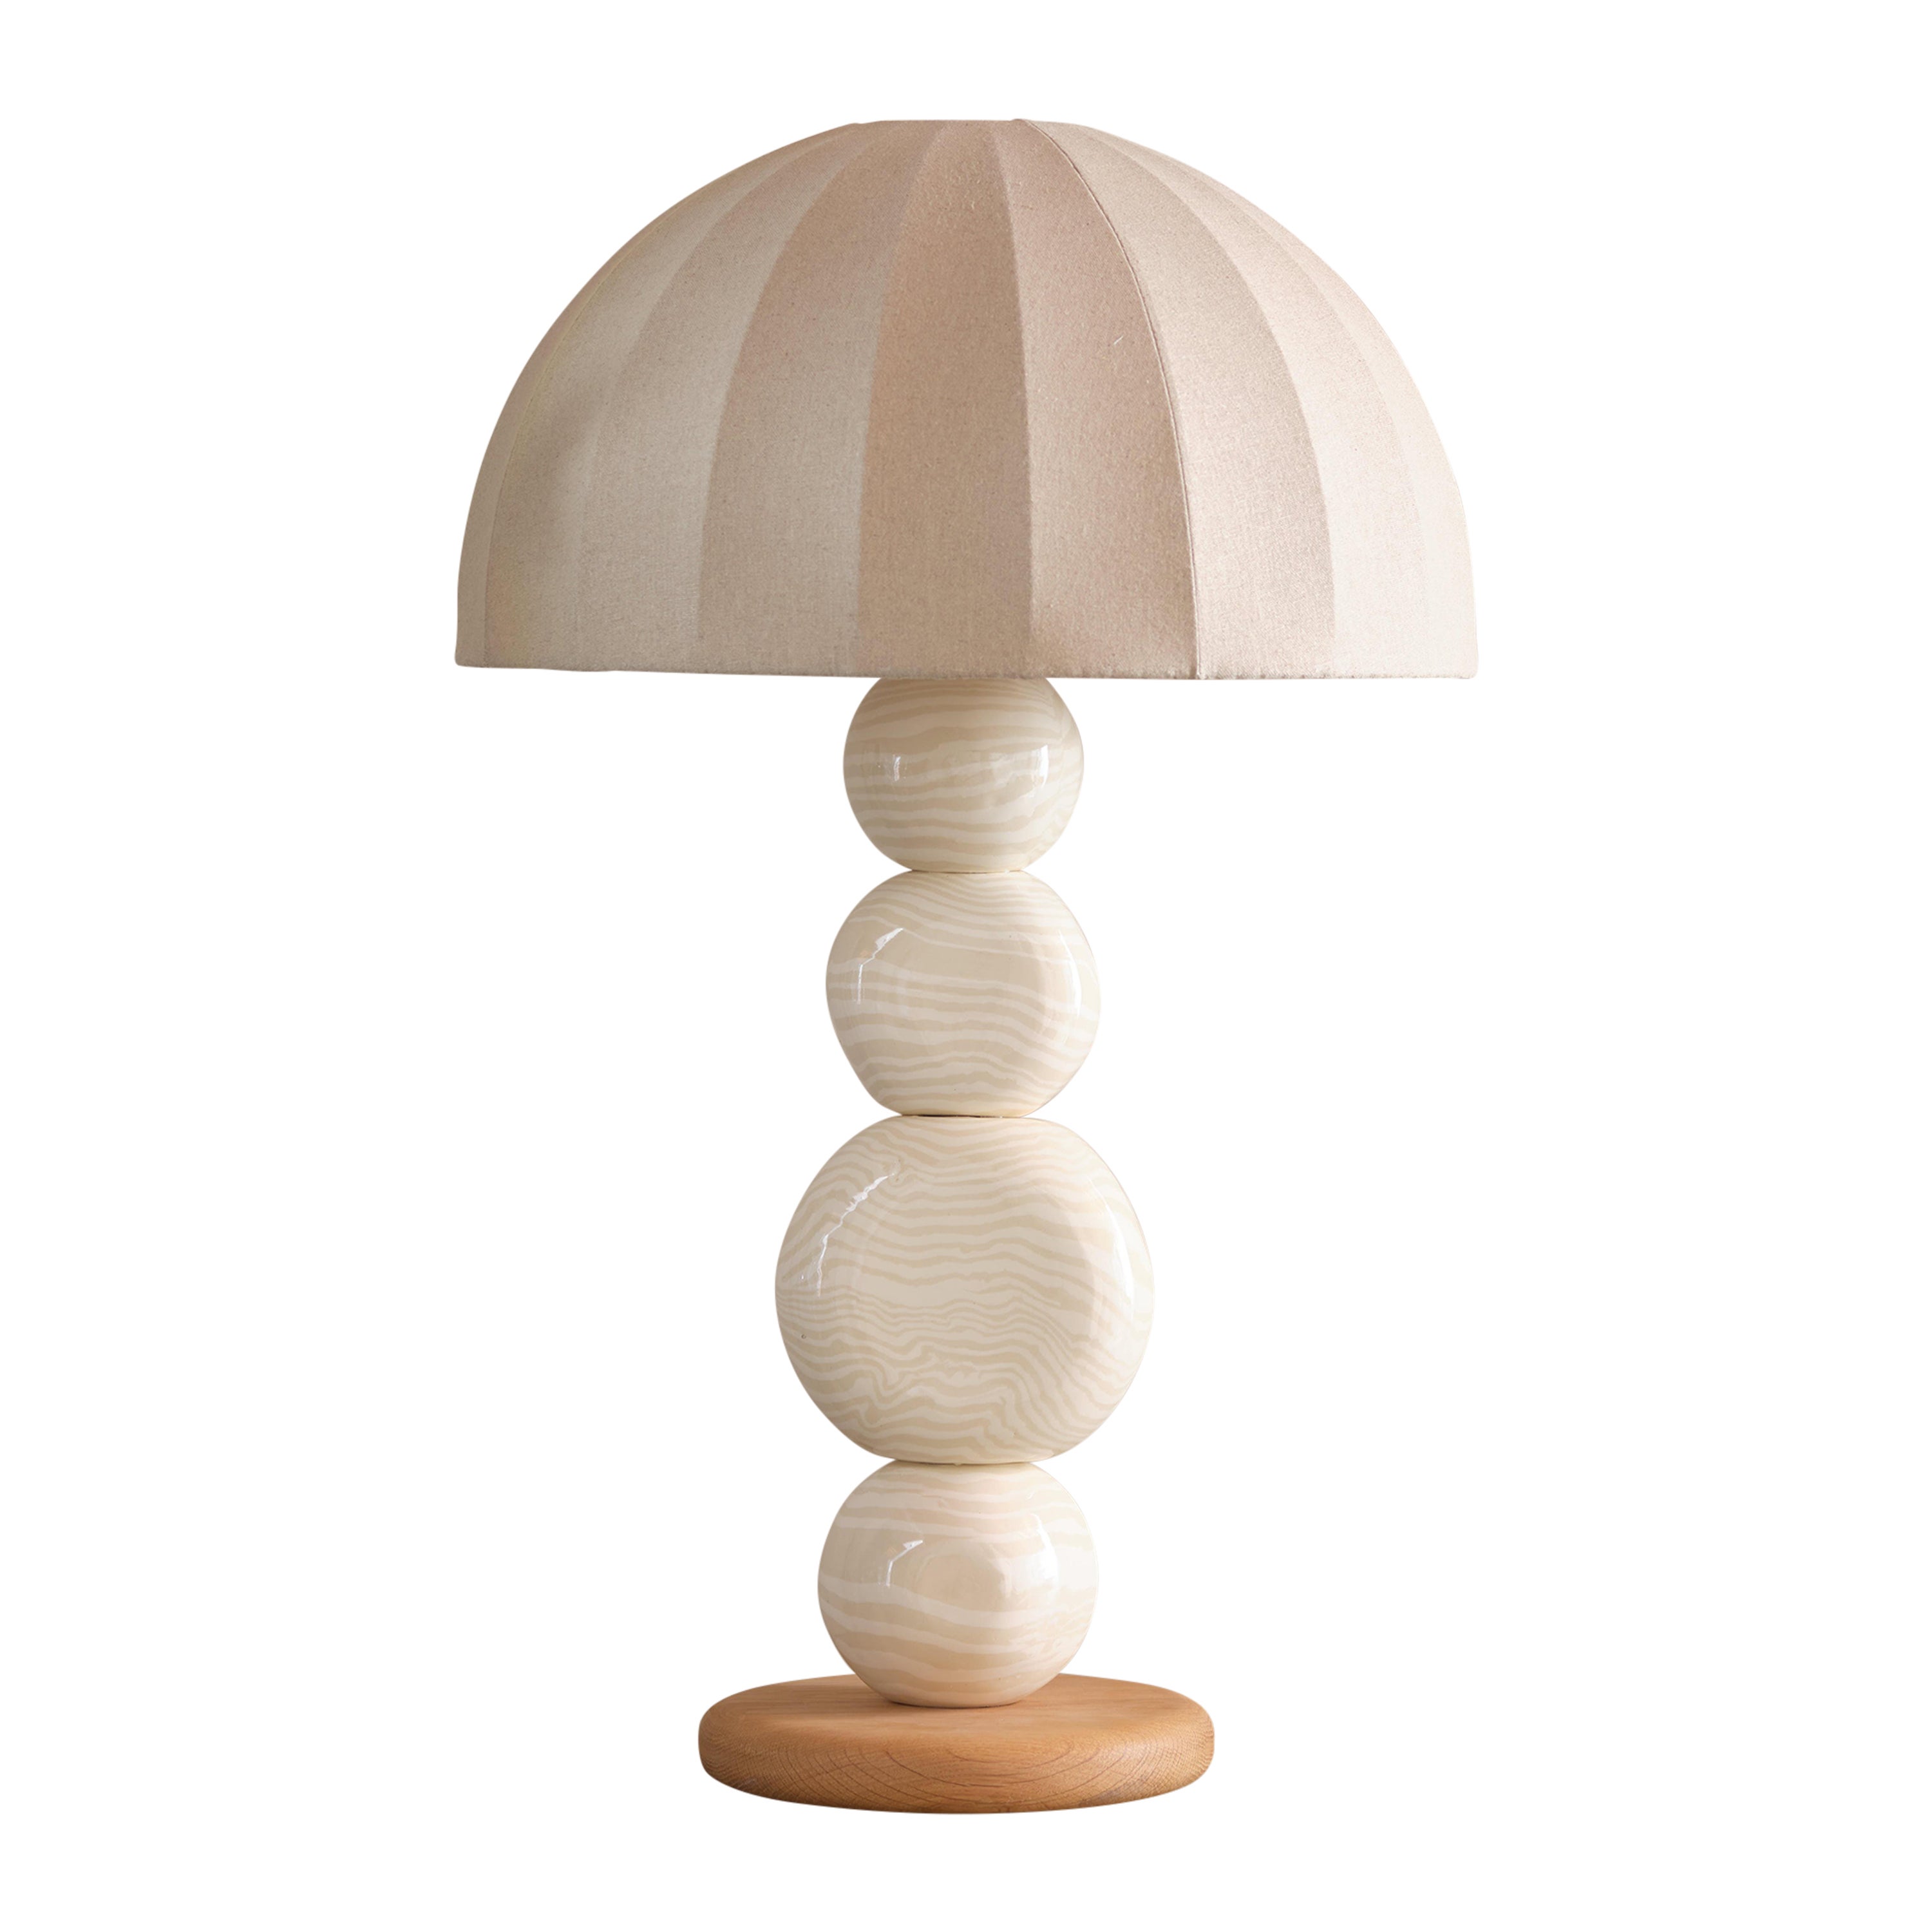 Henry Holland Studio Handmade Oatmeal and White Ceramic Sphere Table Lamp For Sale